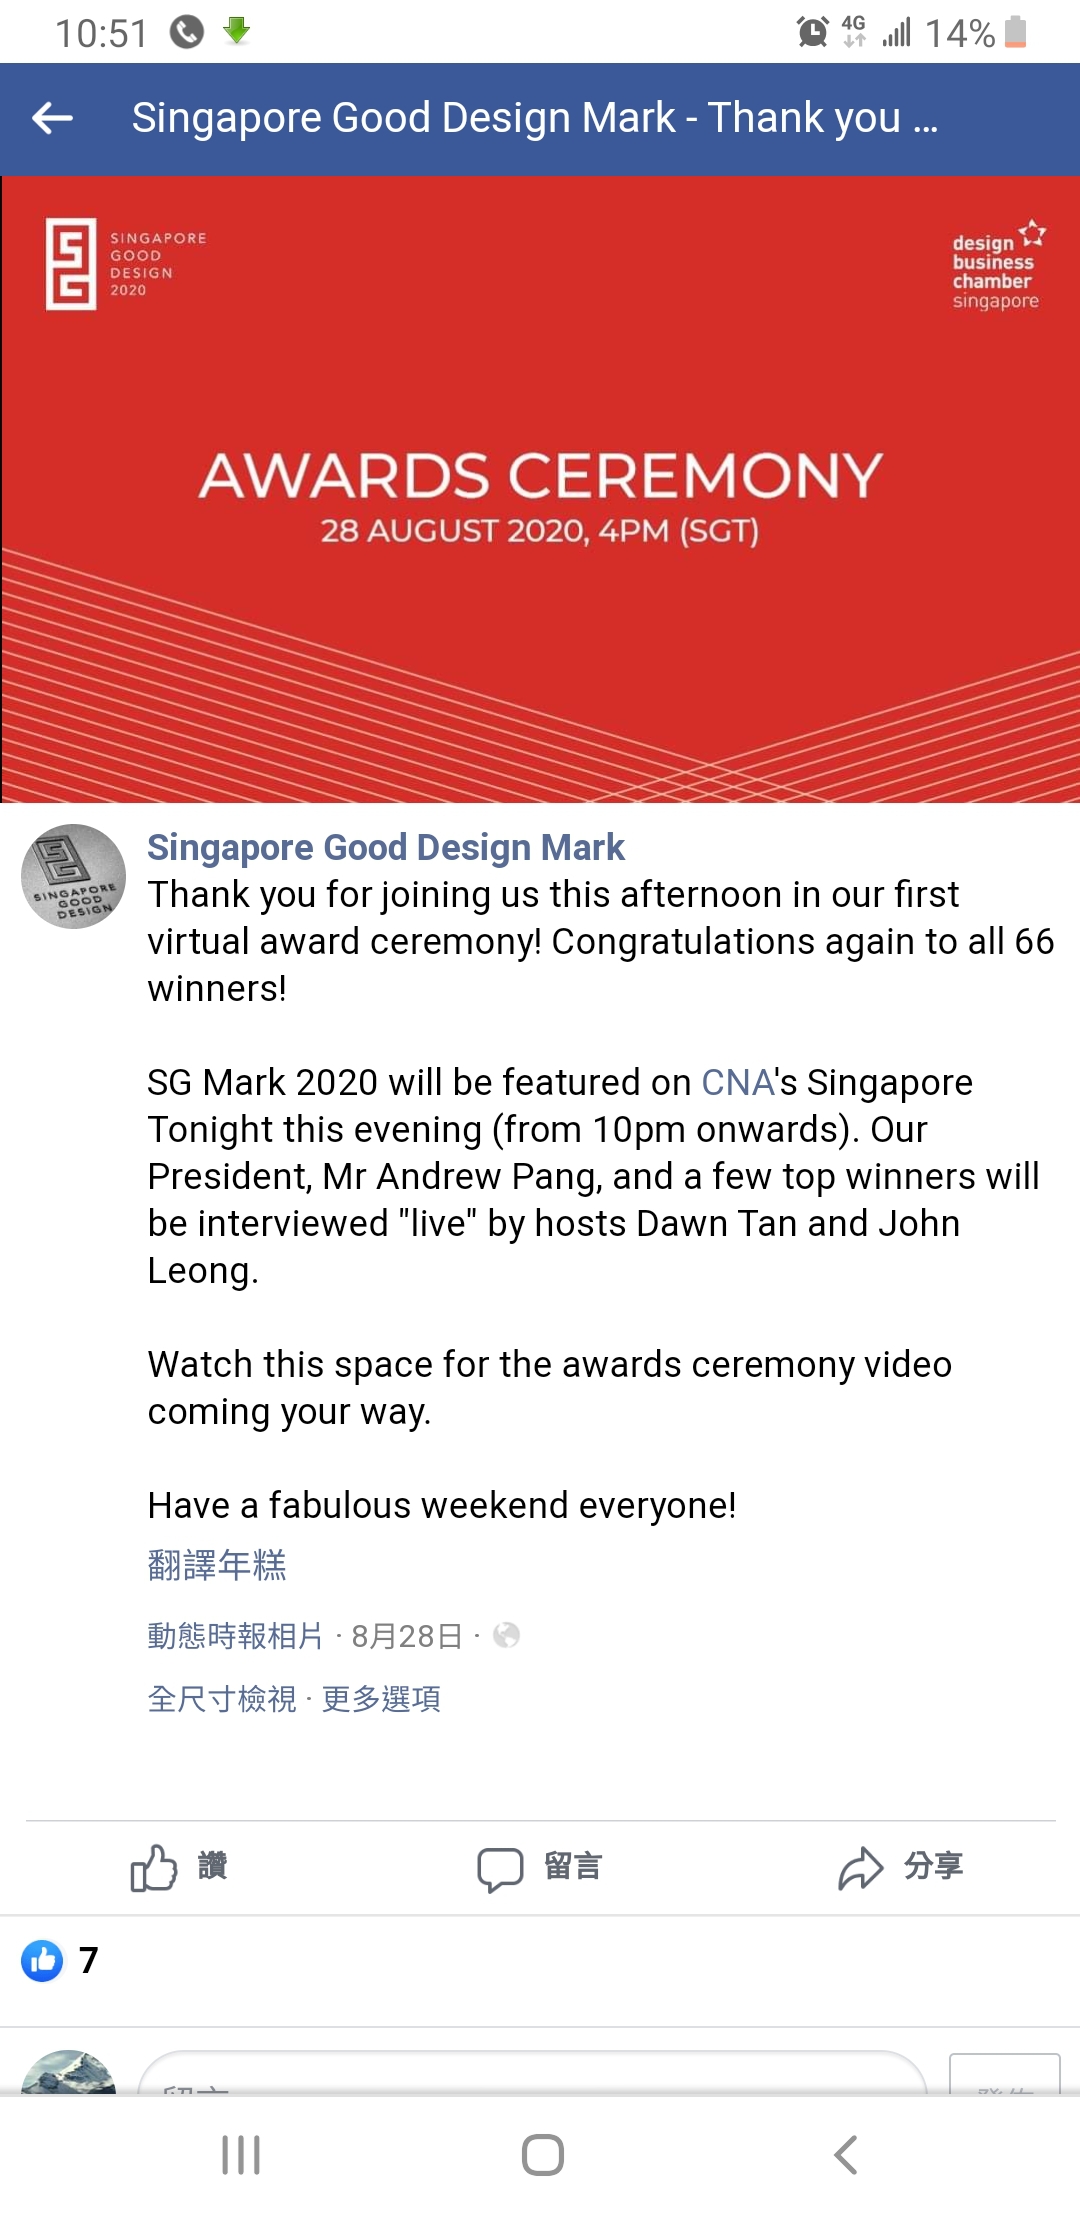 2020 Singapore Good Design Mark 頁面說明/和平島公園提供